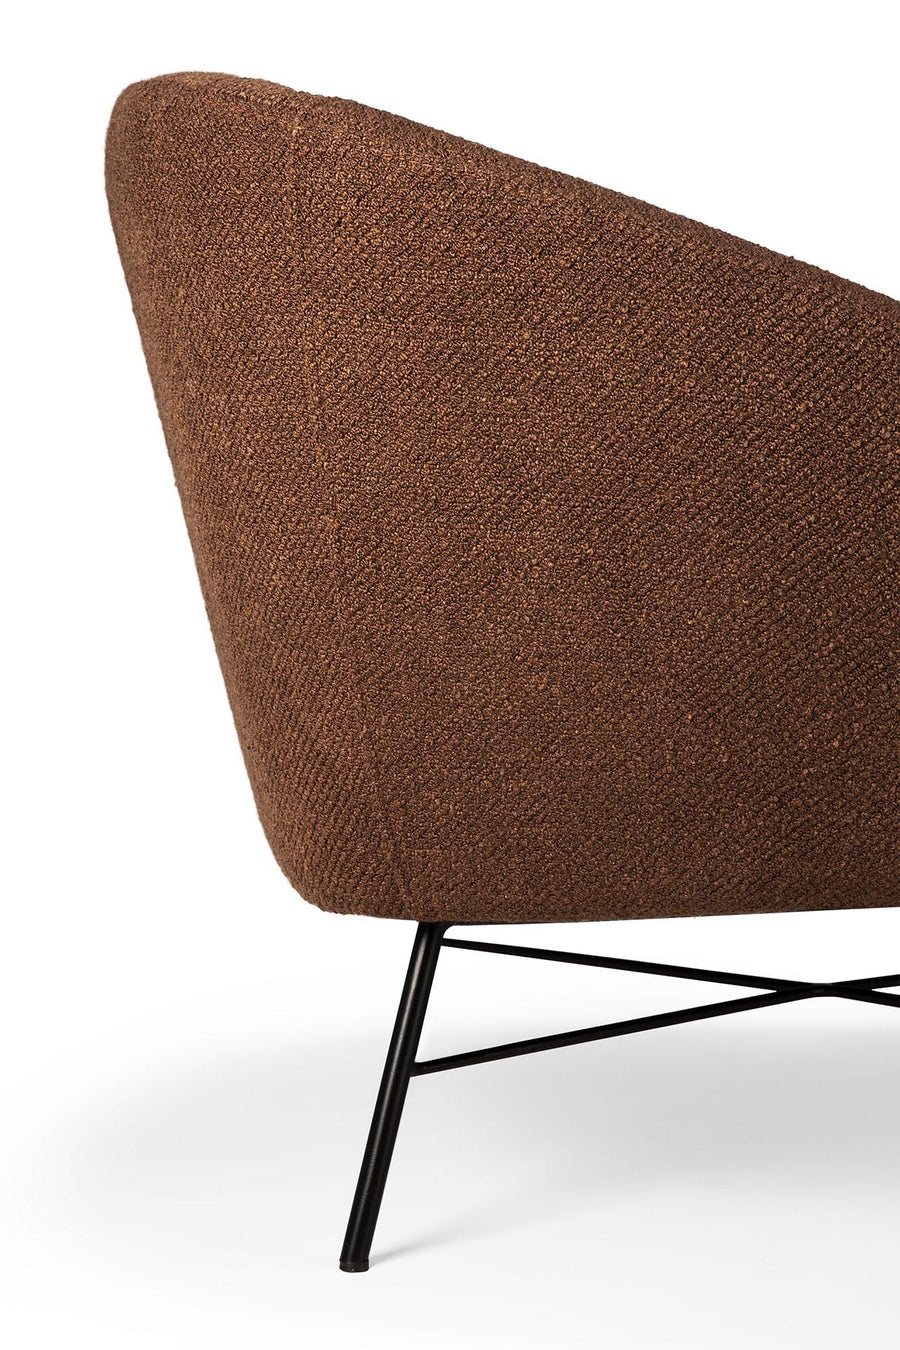 Barrow Lounge Chair - Copper